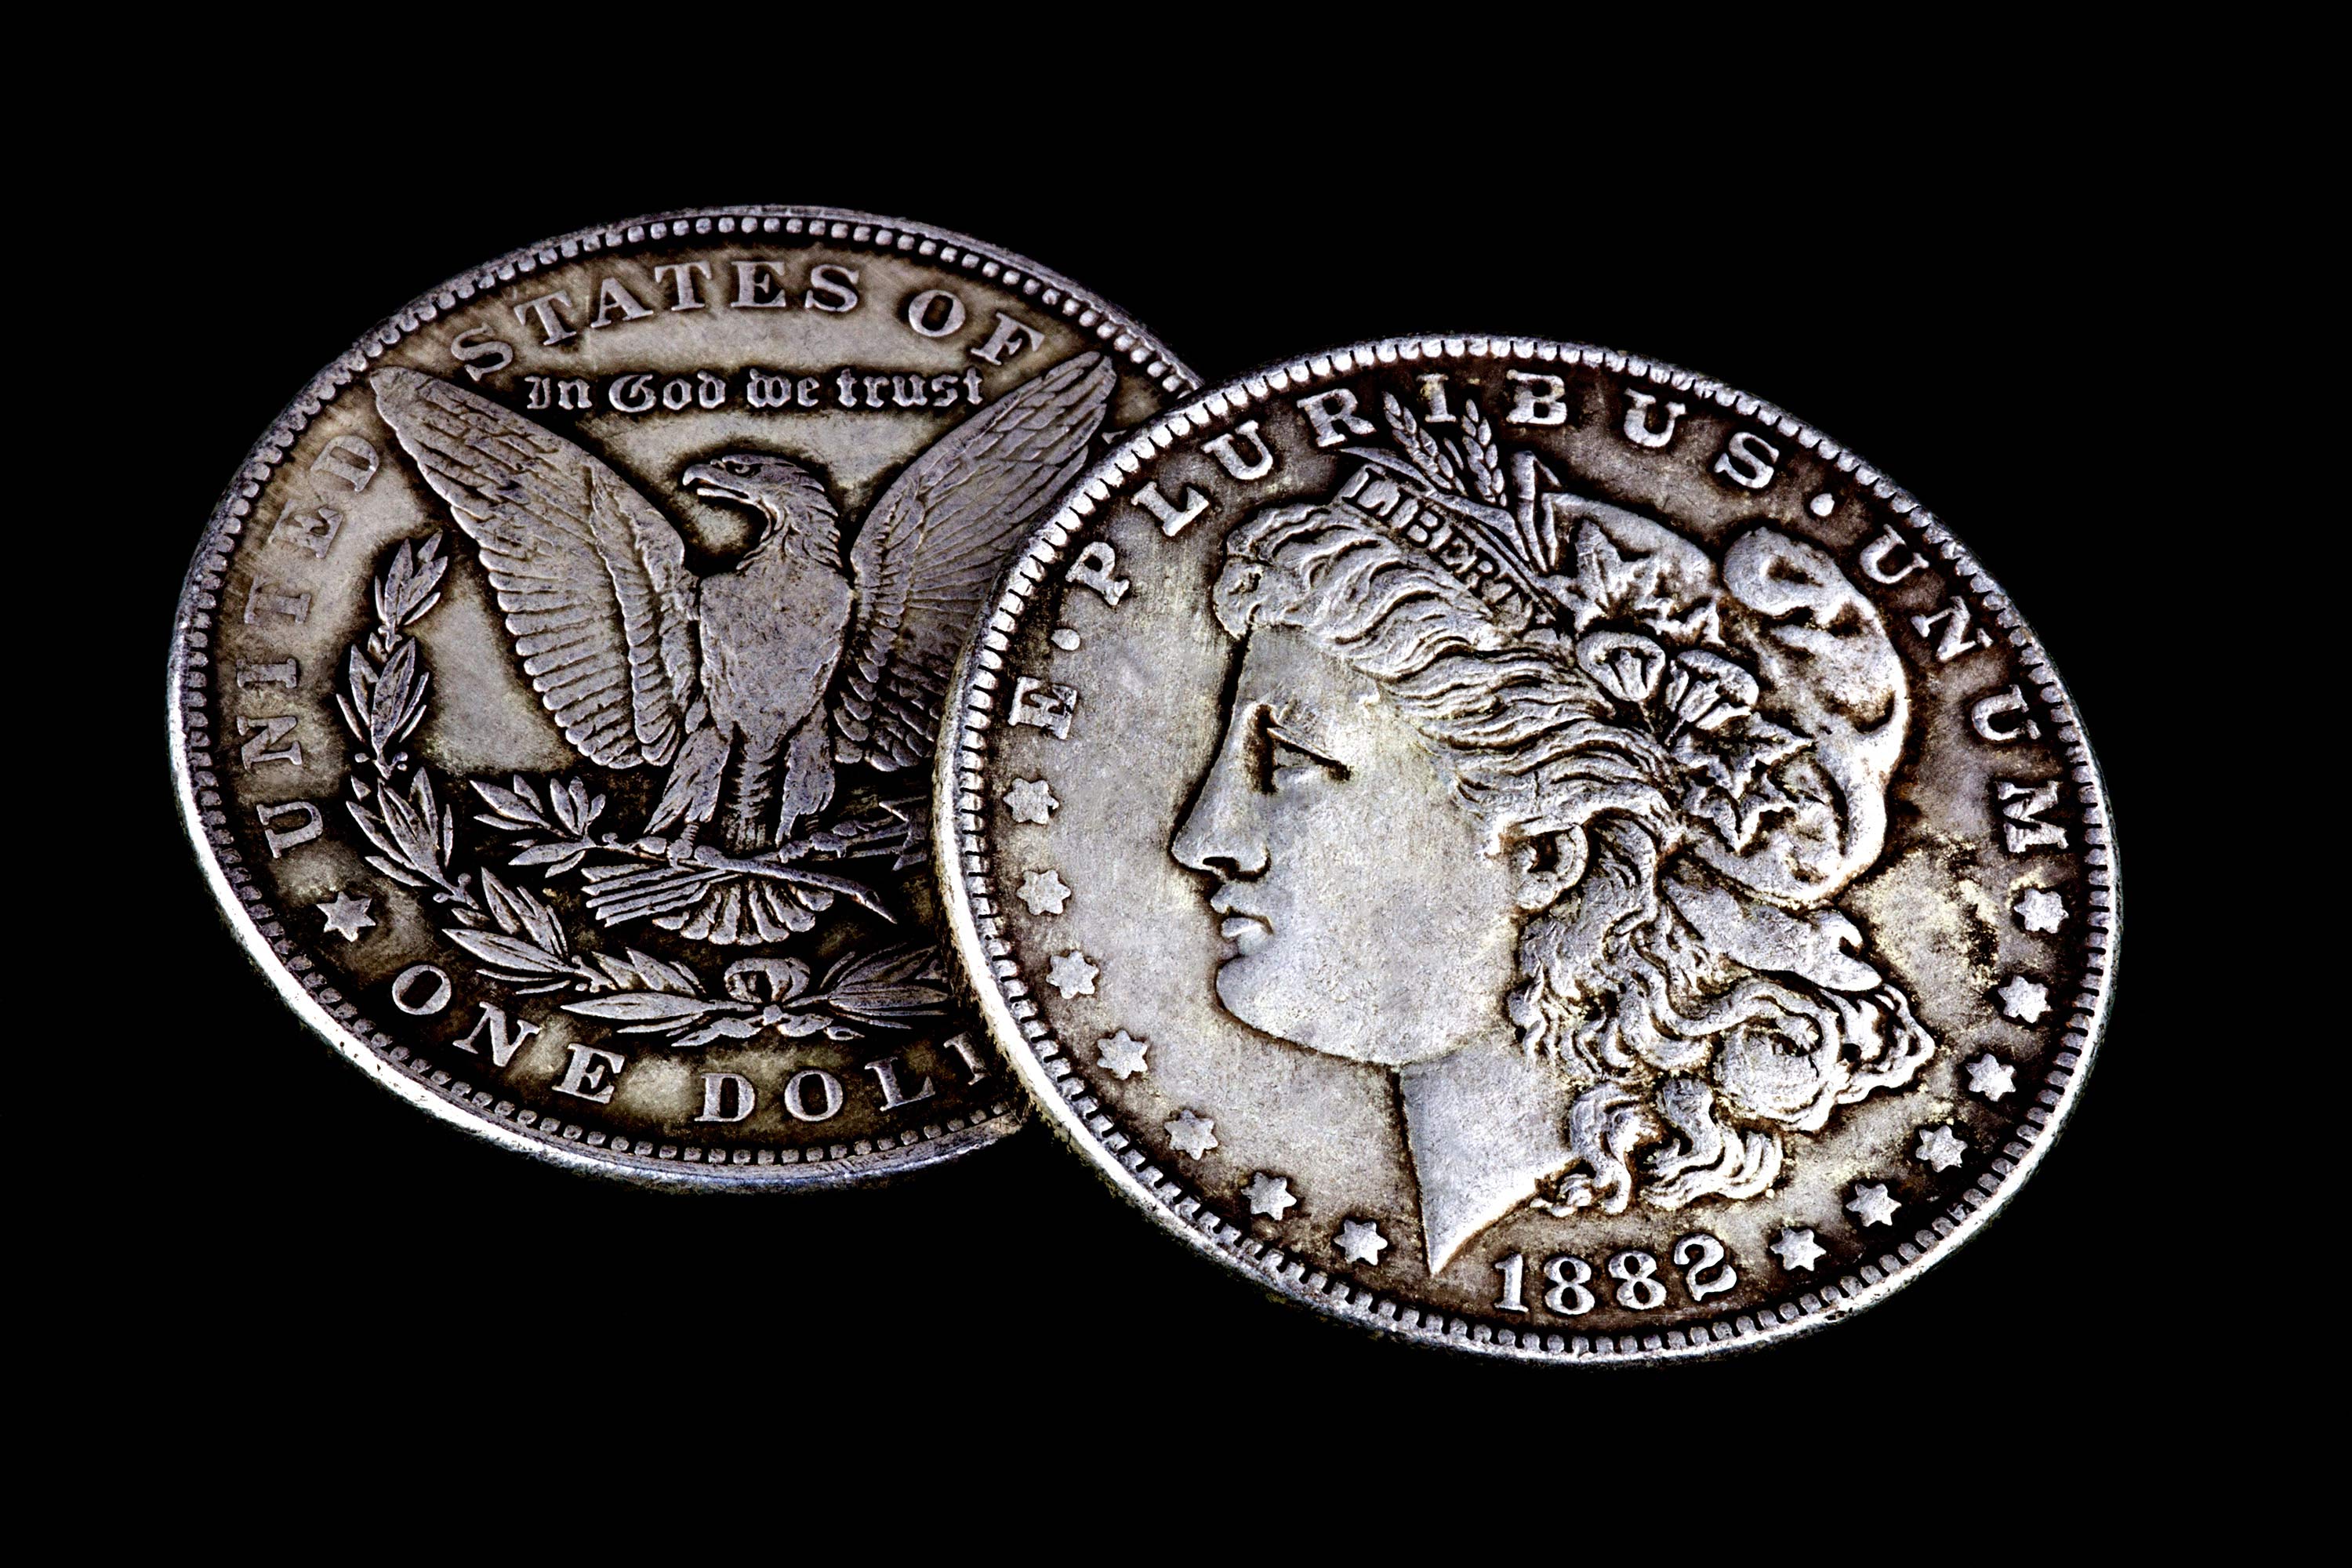 Blog - Building A Collection of Rare Coins